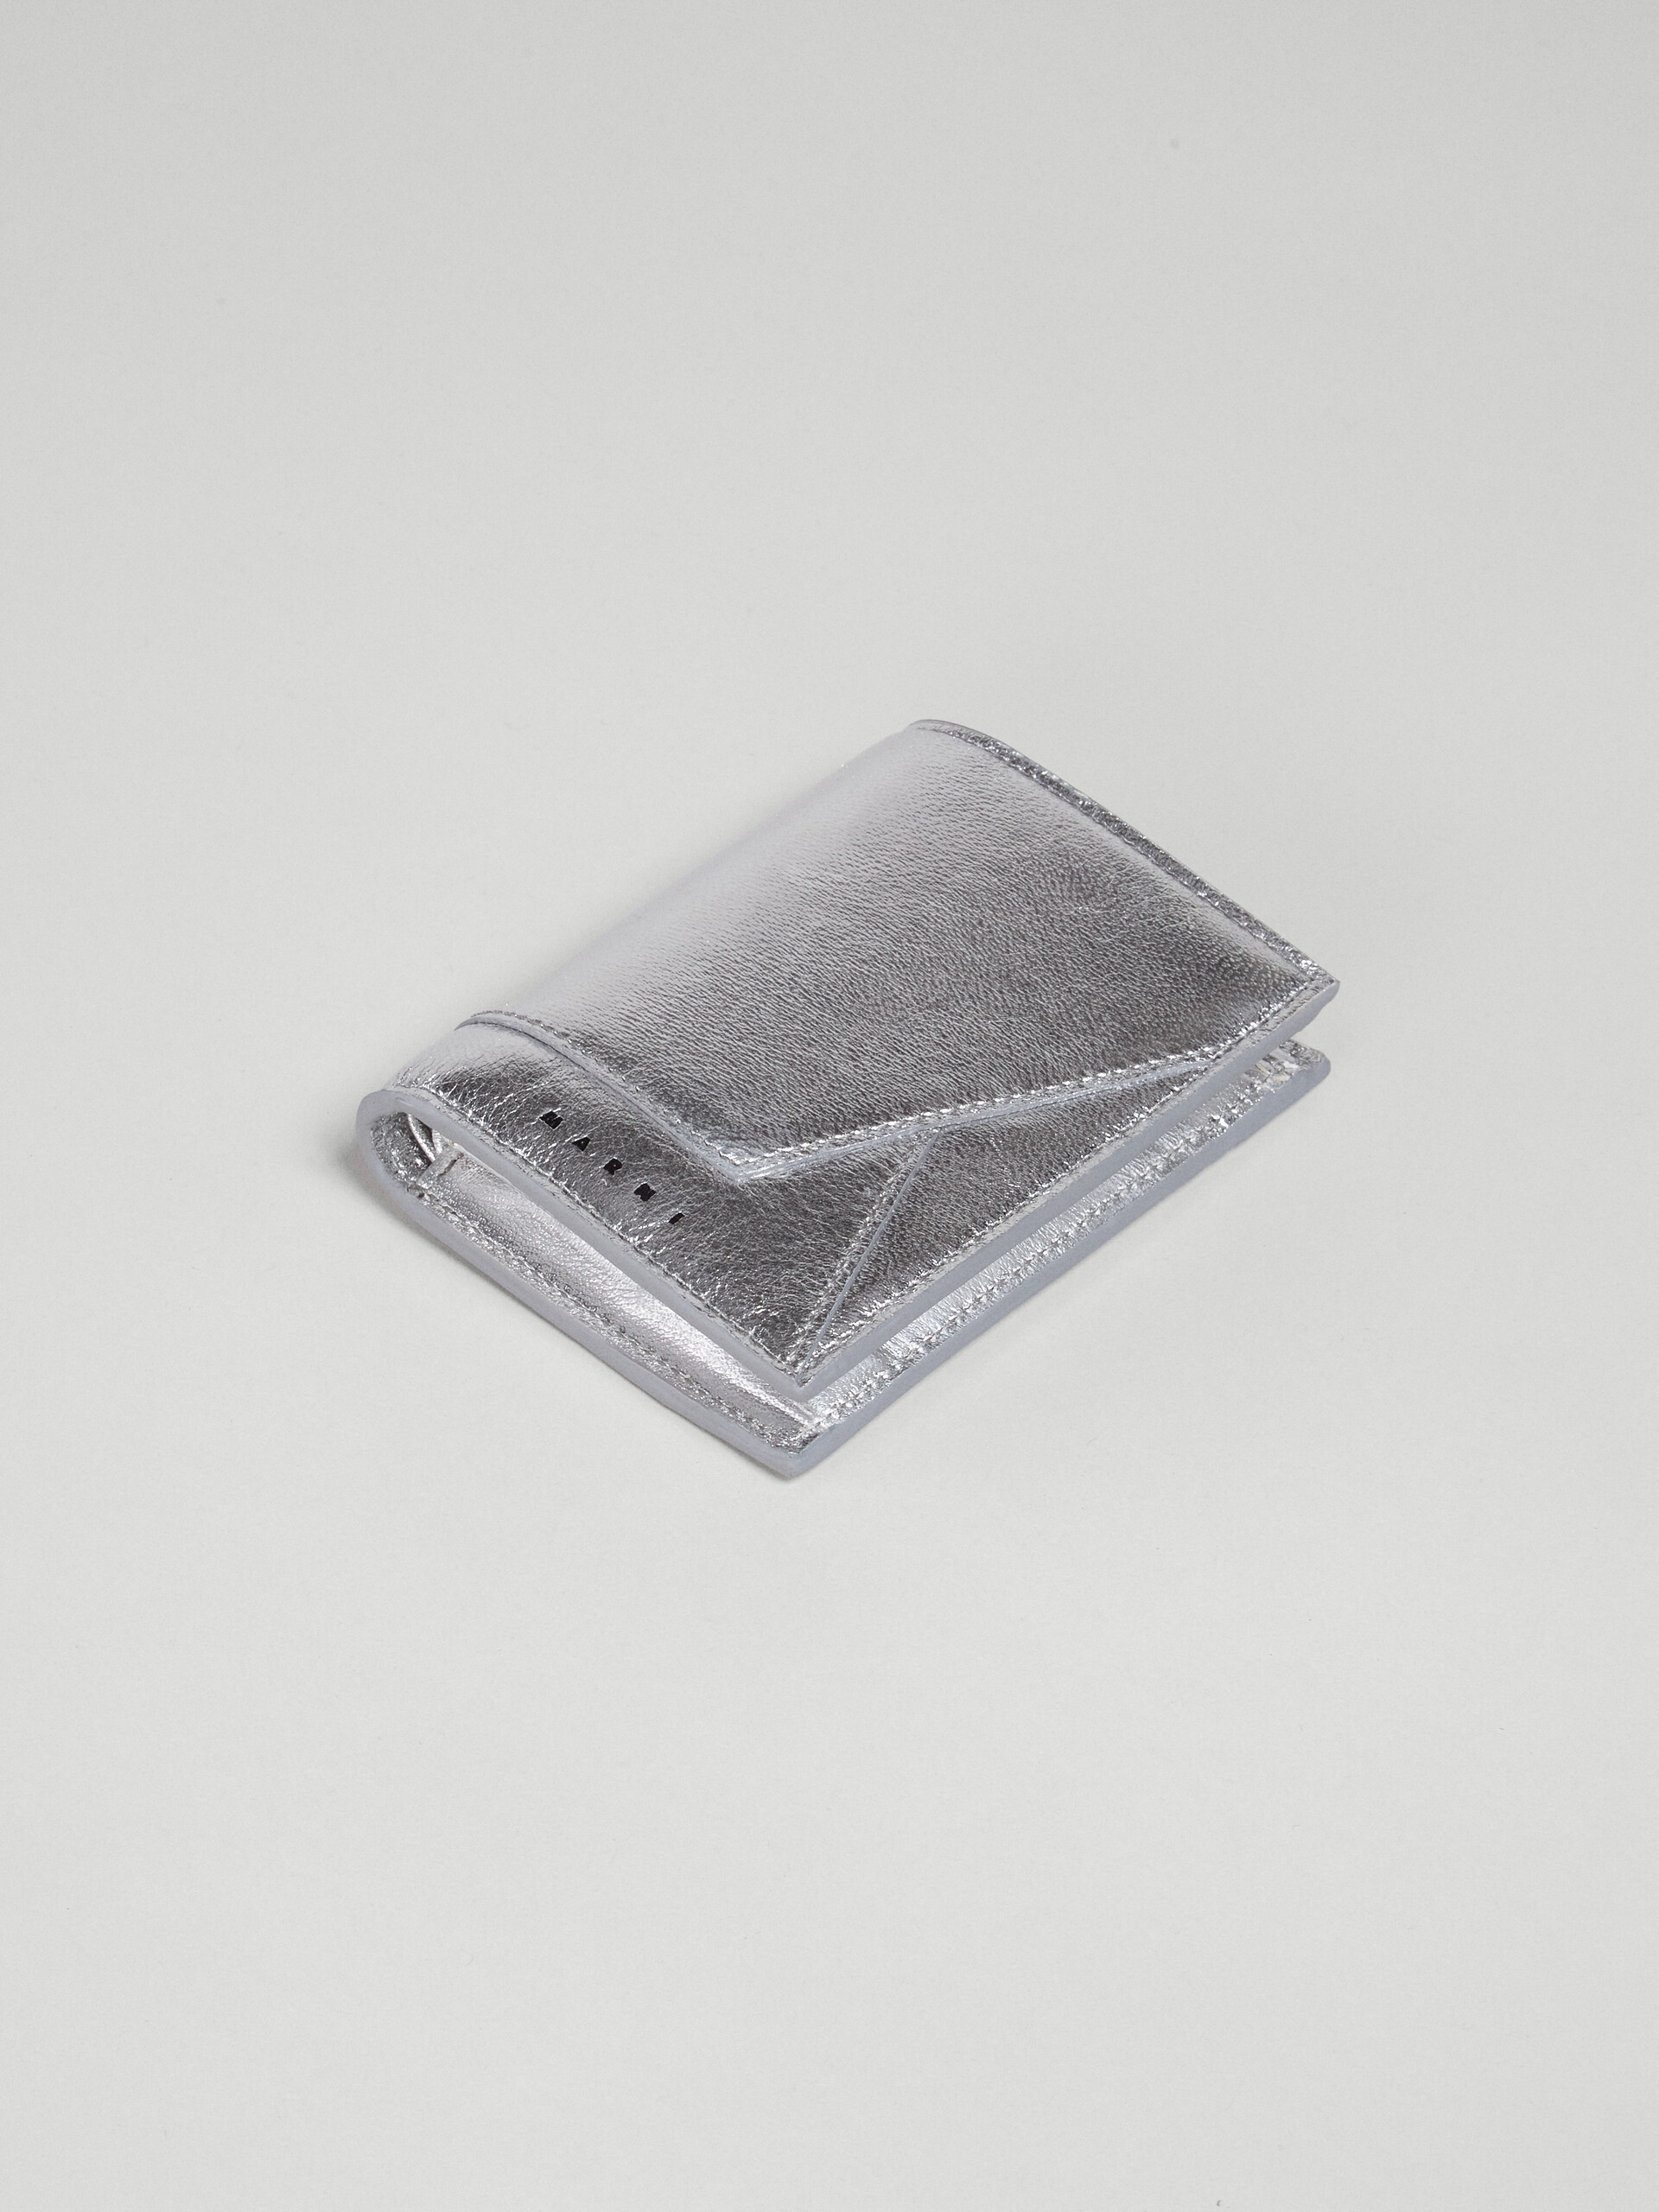 Silver metallic nappa leather bi-fold wallet - Wallets - Image 5